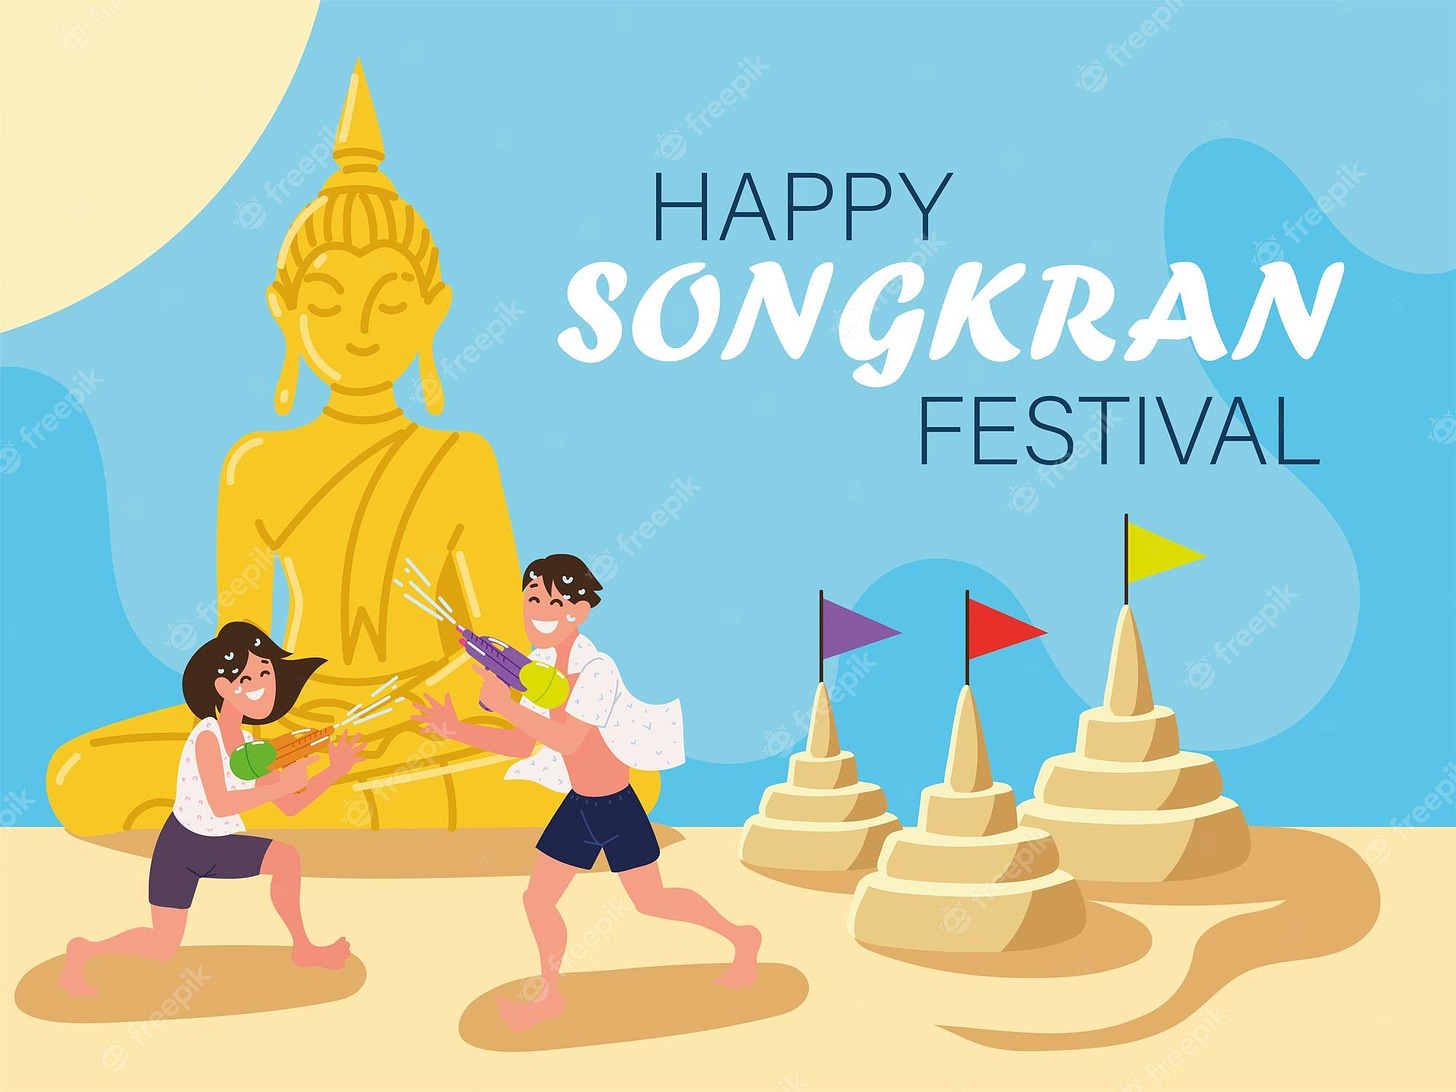 Free Vector | Happy songkran festival card style